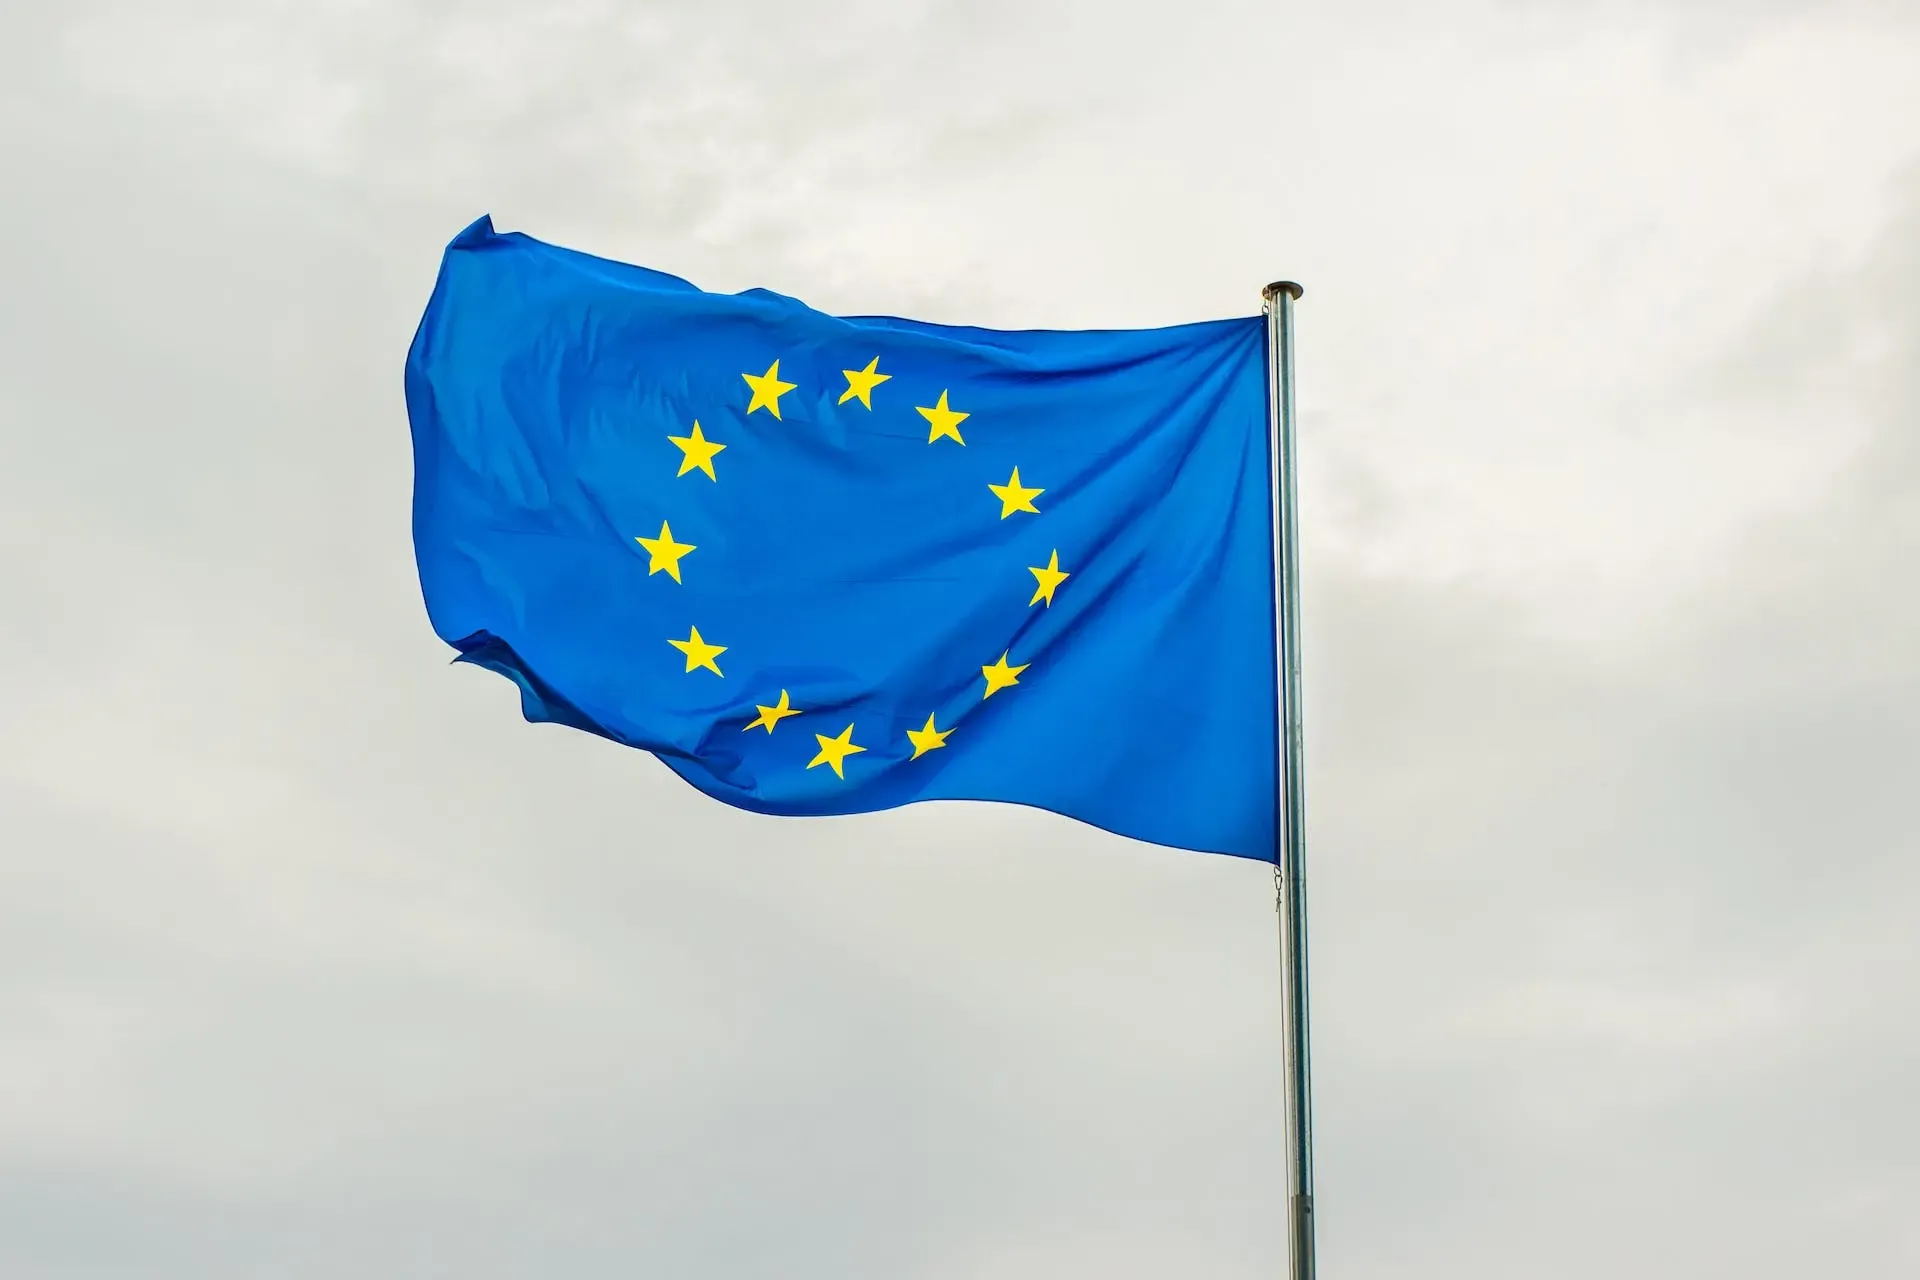 A flag of the European Union waving against a cloudy sky.